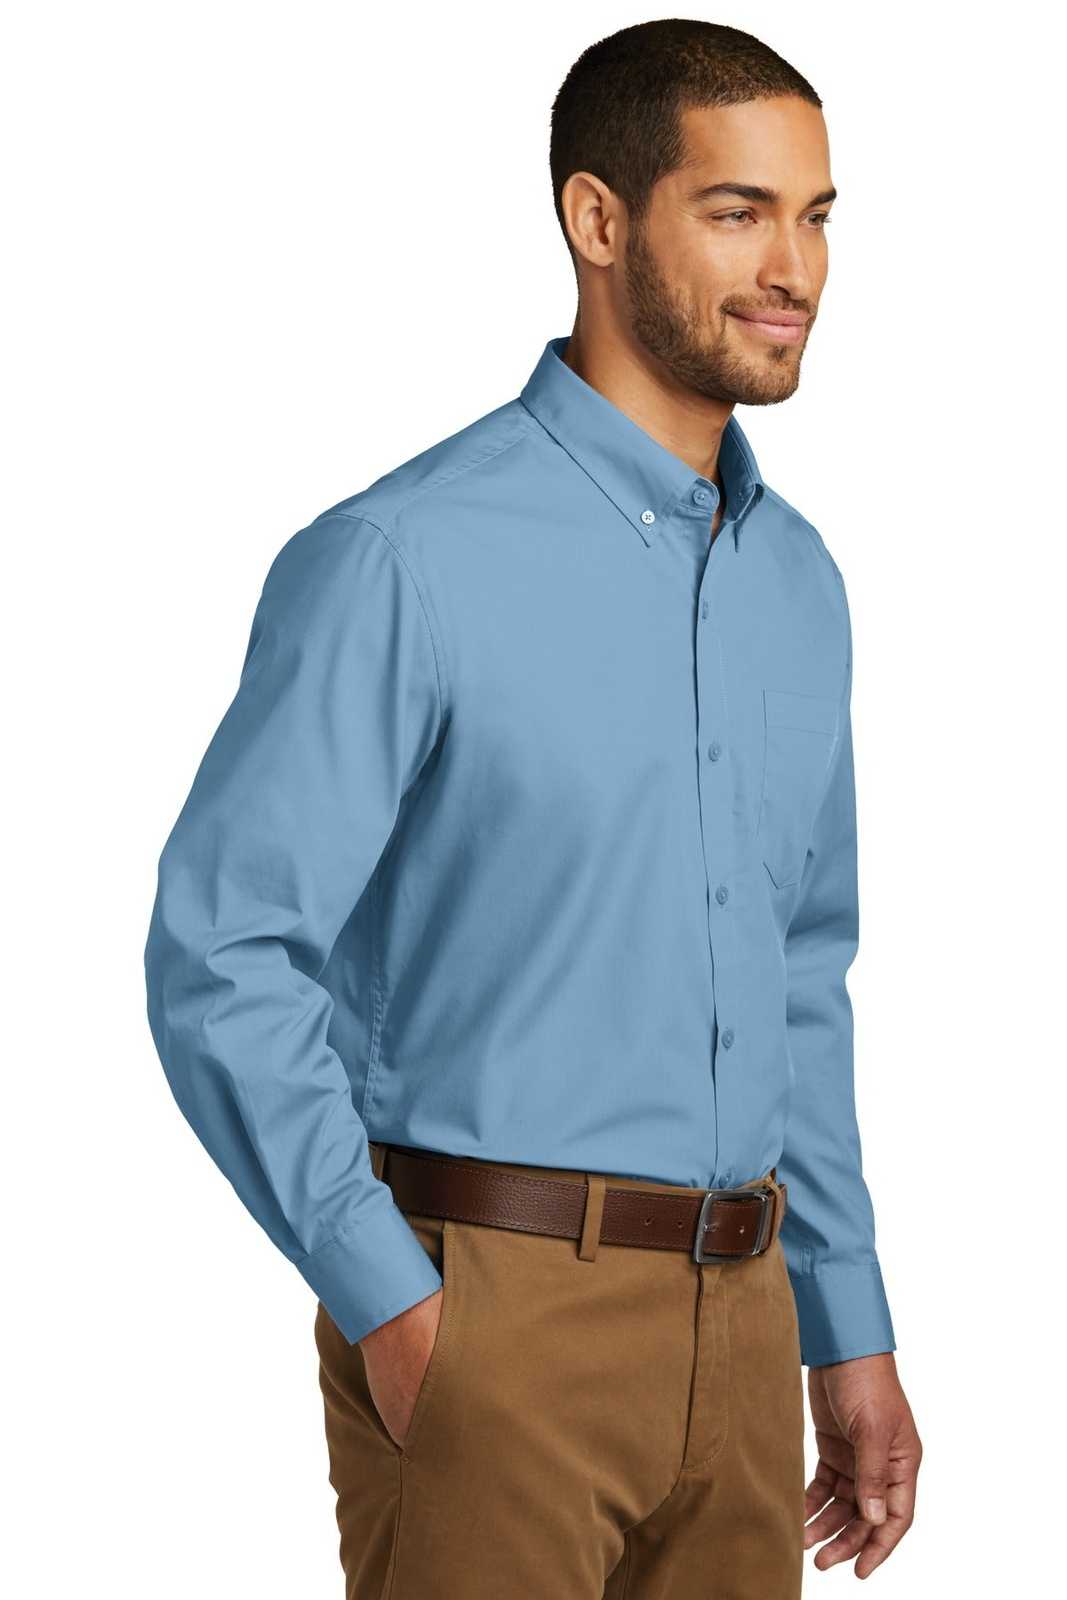 Port Authority W100 Long Sleeve Carefree Poplin Shirt - Carolina Blue - HIT a Double - 4